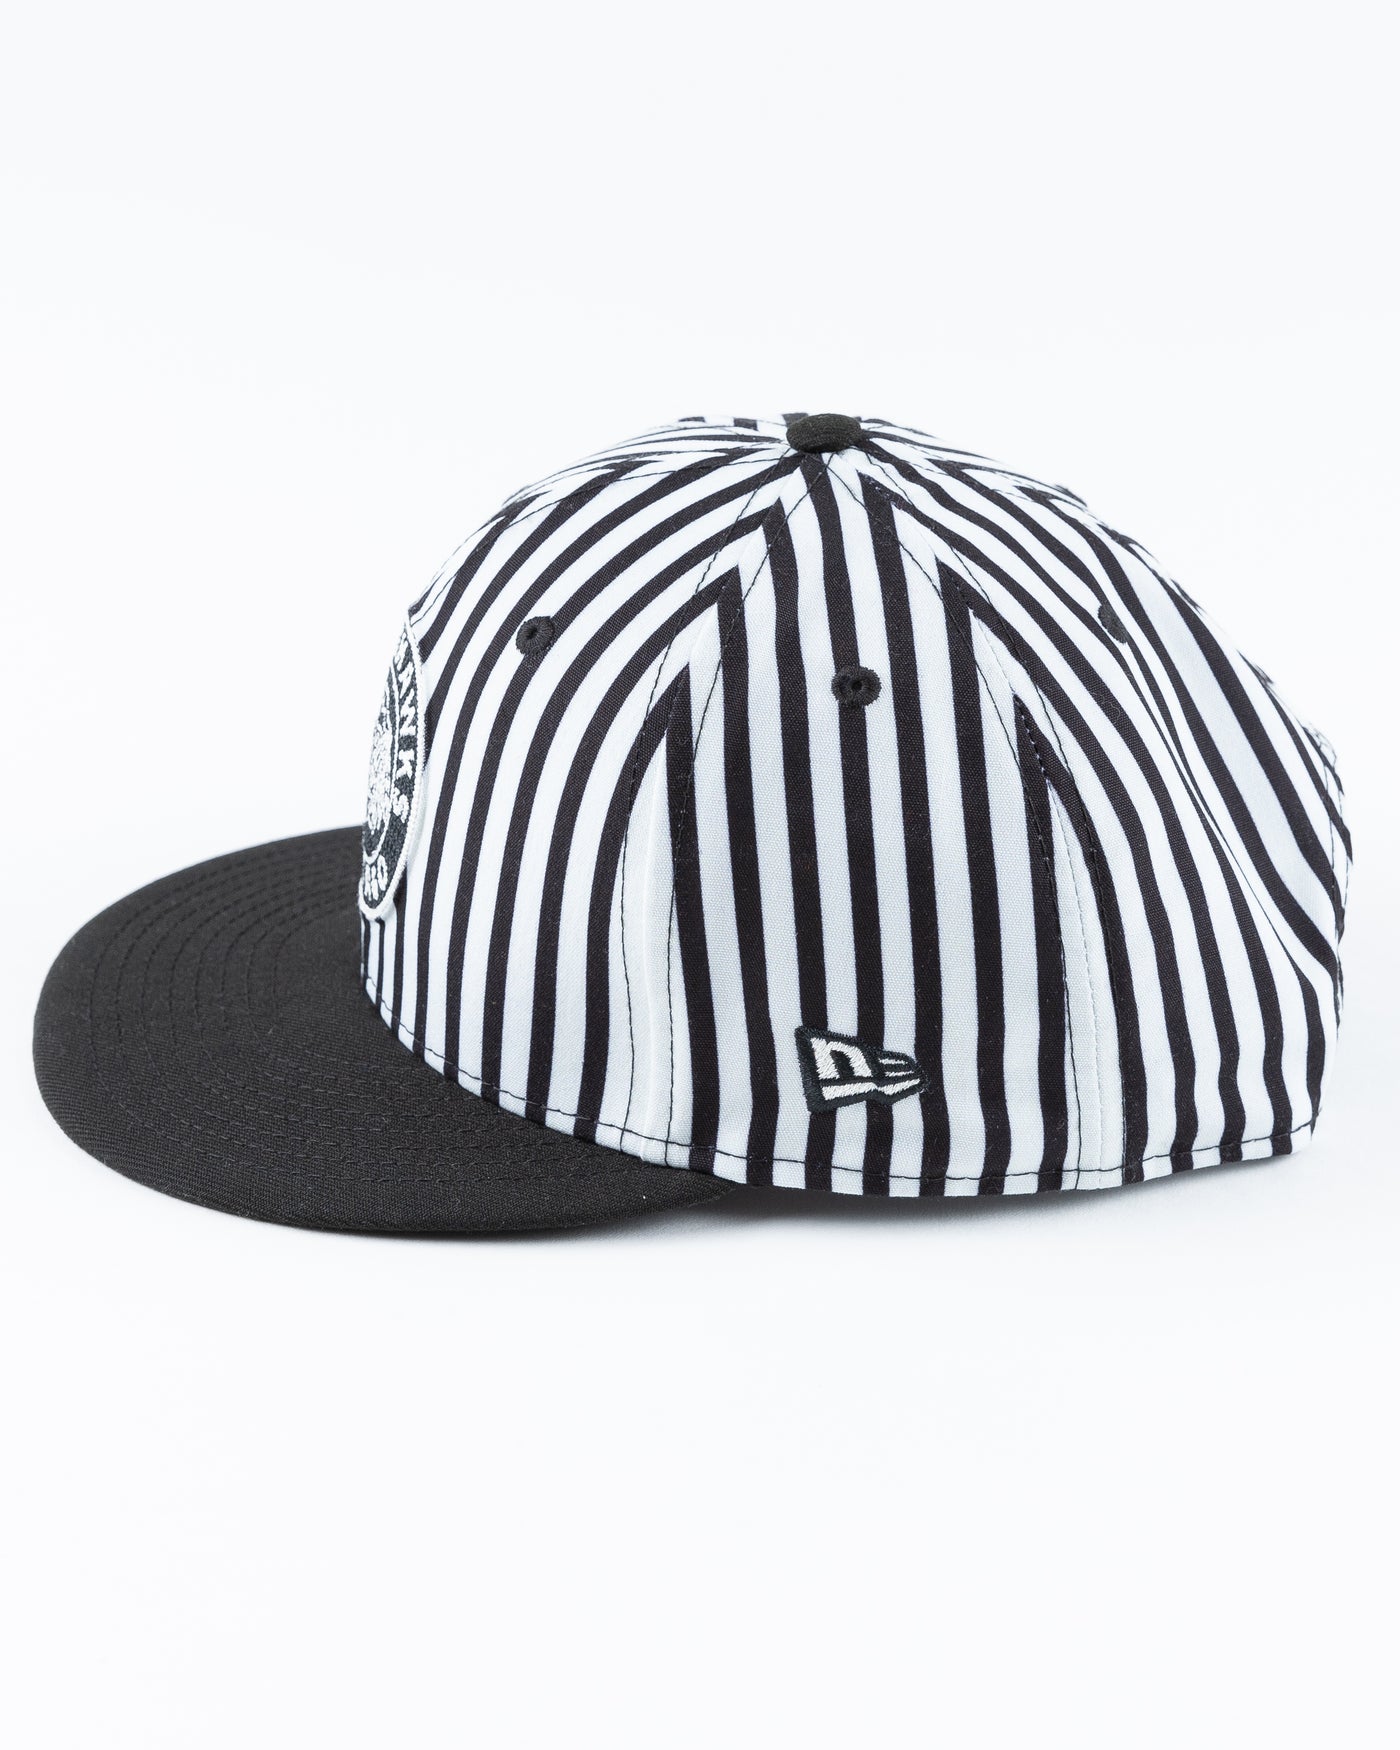 black and white zebra printed New Era snapback cap with tonal Chicago Blackhawks logo on front - left side lay flat